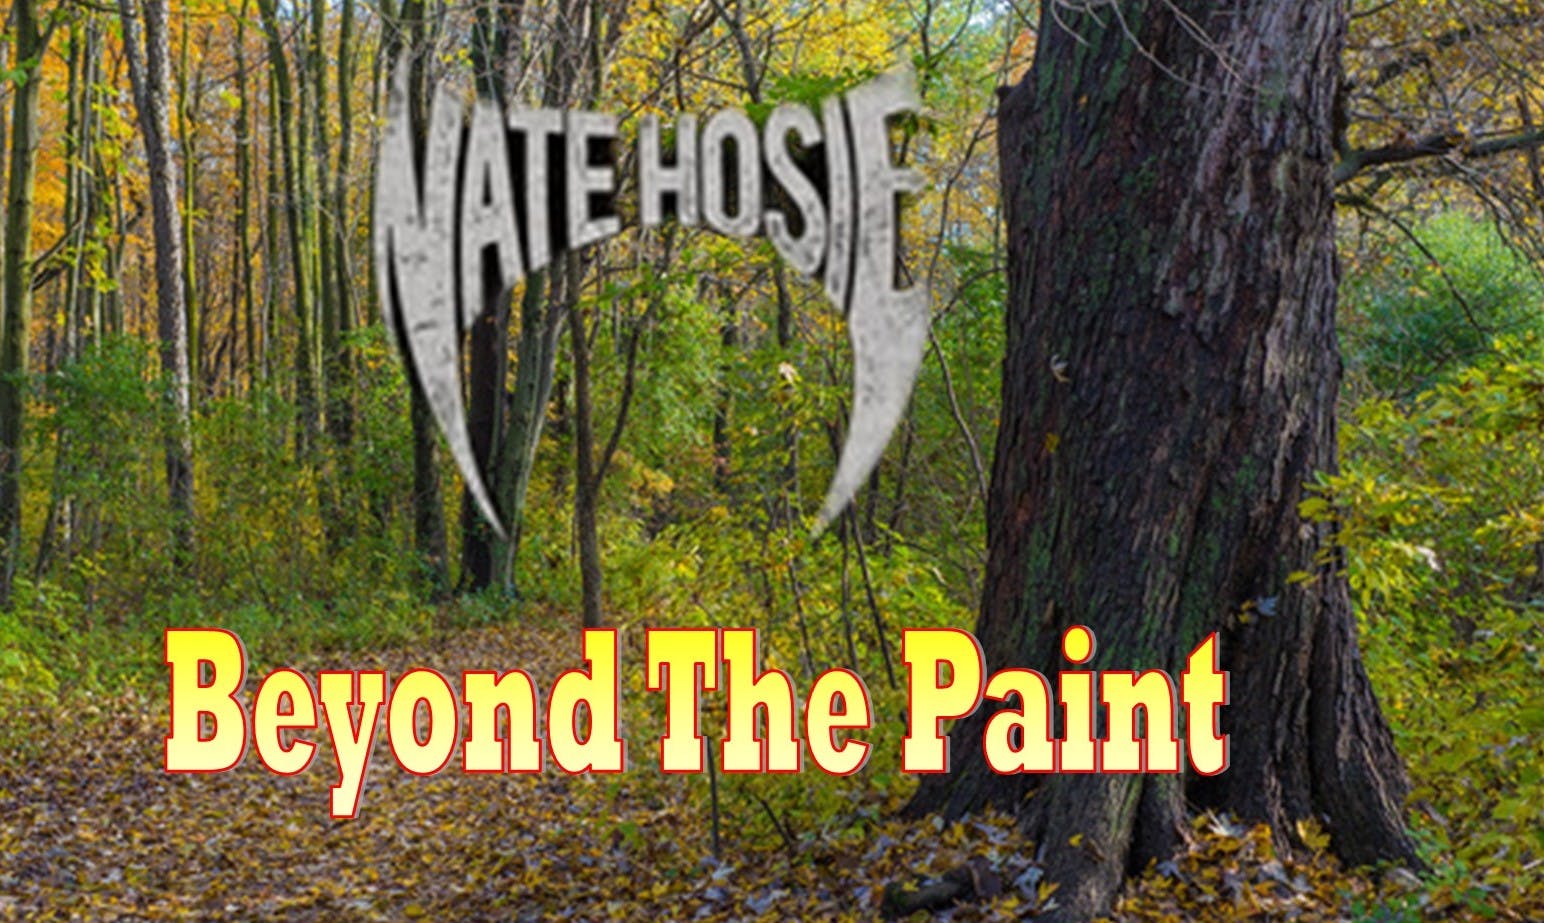 Nate Hosie: Beyond the Paint